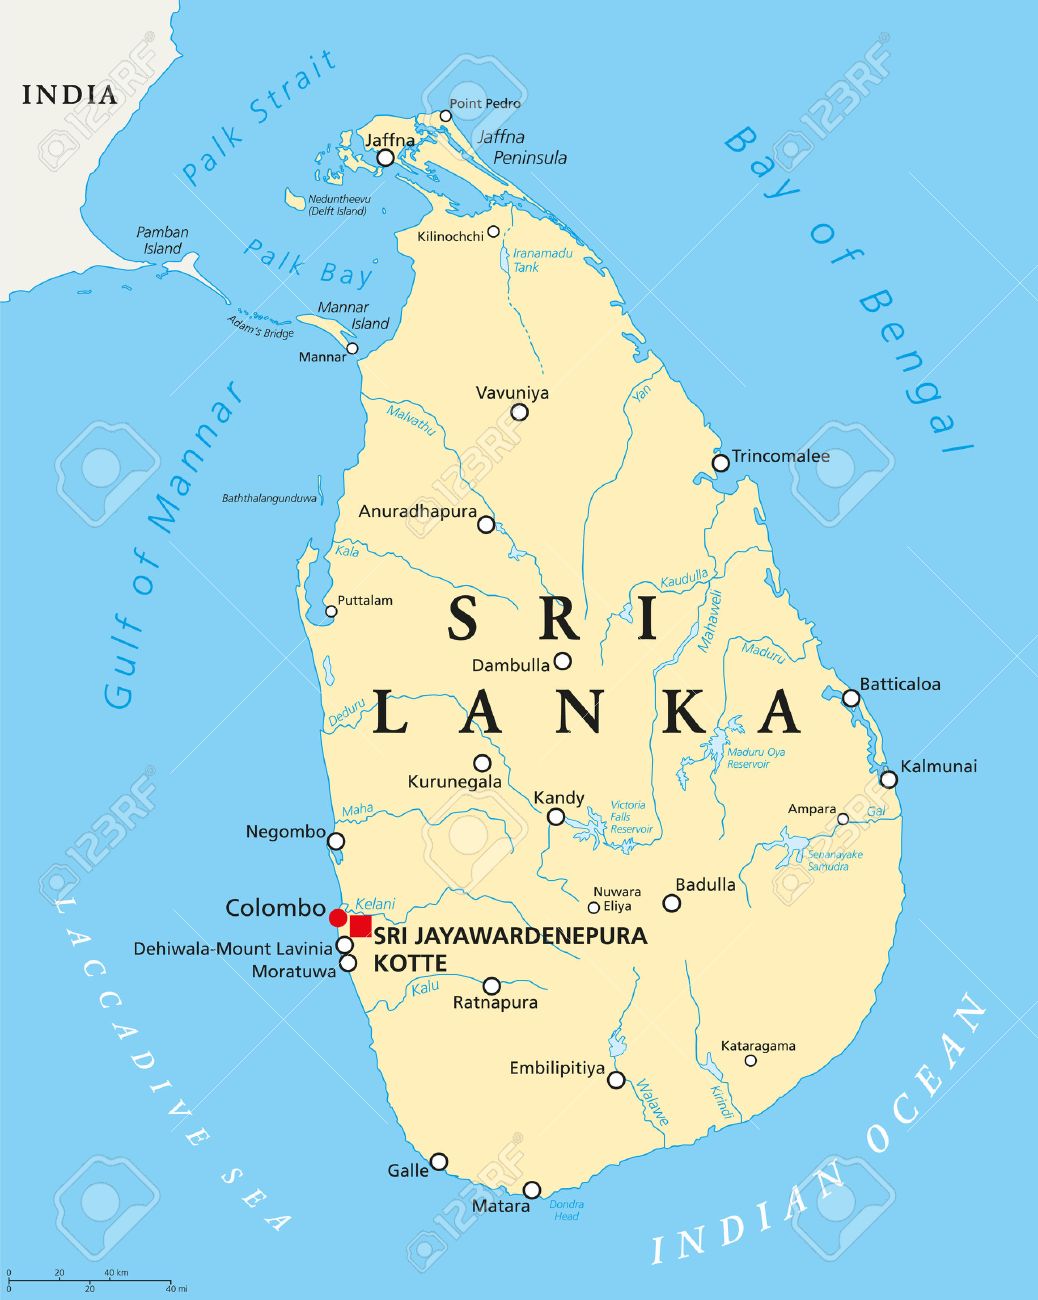 श्रीलंकामा संसद भङ्ग, मध्यावधि चुनाव आउँदो बैशाख १३ गते